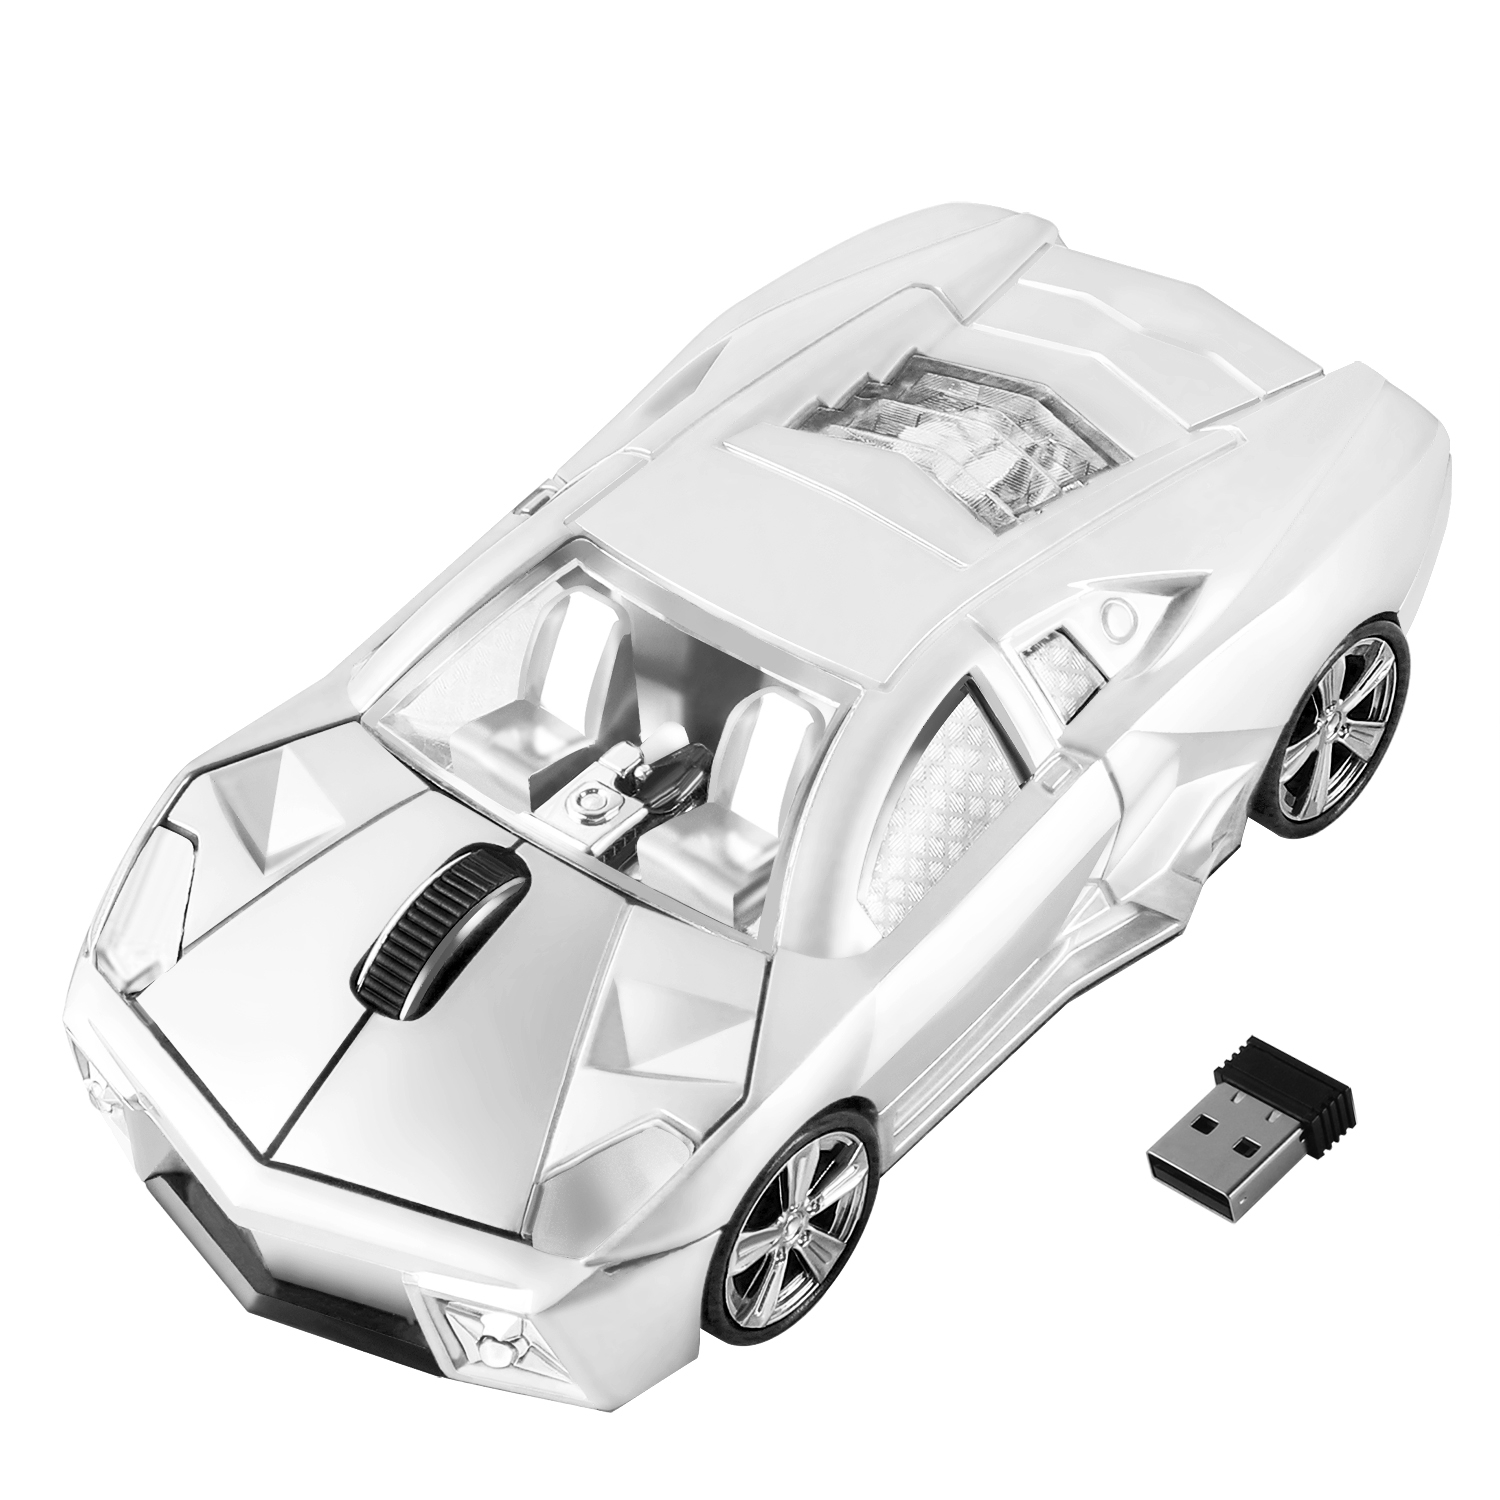 2-4G-Wireless-Mouse-Ergonomic-Sports-Car-Design-Gaming-Mause-1600-DPI-USB-Optical-Kids-Gift (10)